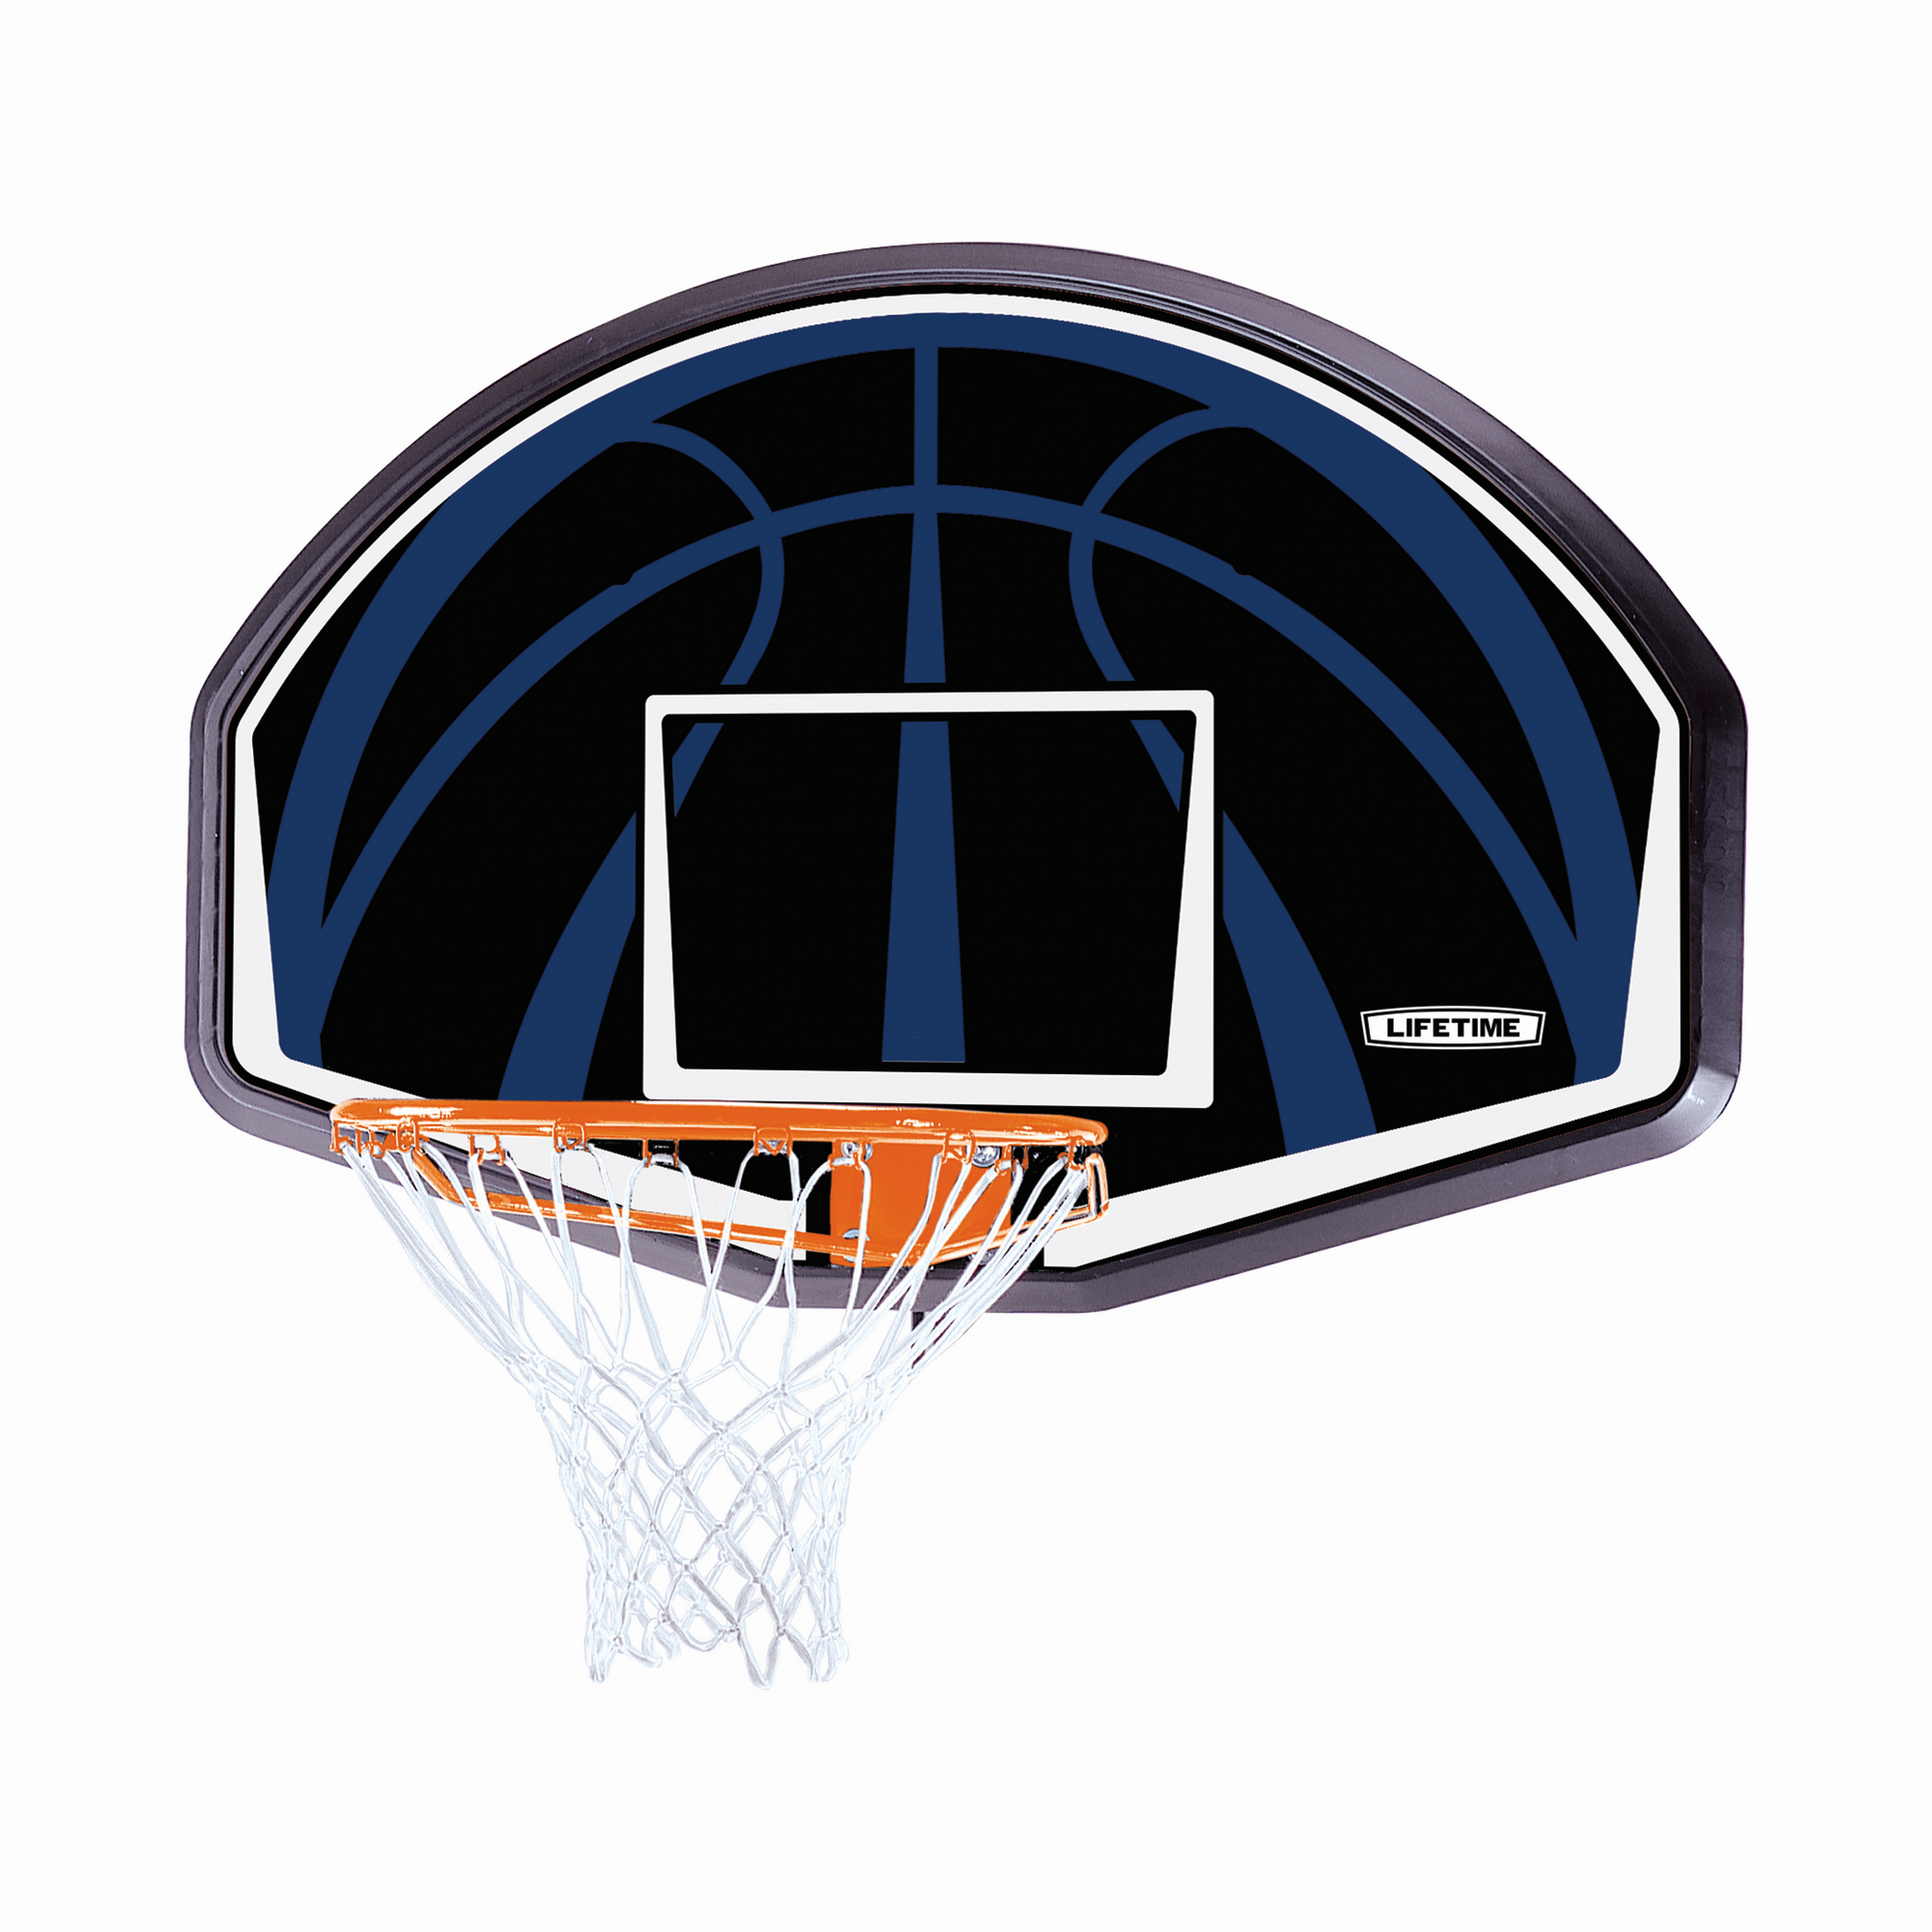 Lifetime Basketballkorb 'Colorado' schwarz/blau 112 x 72 x 3 cm